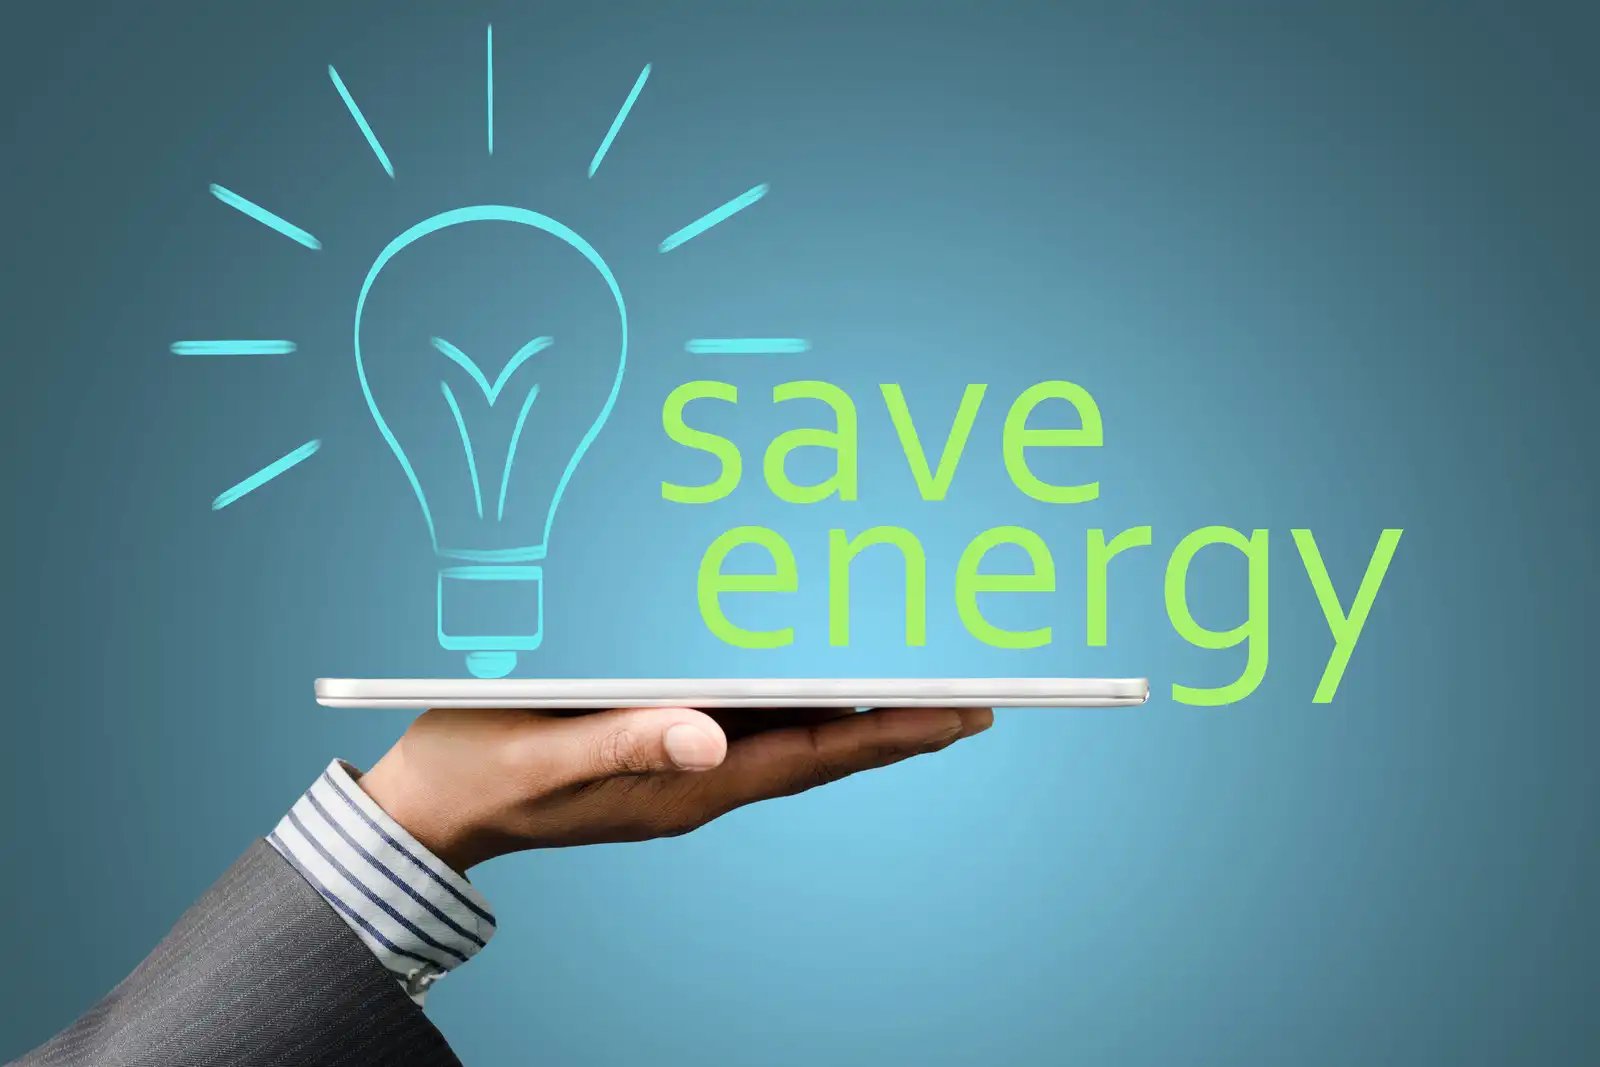 Energy saving technology